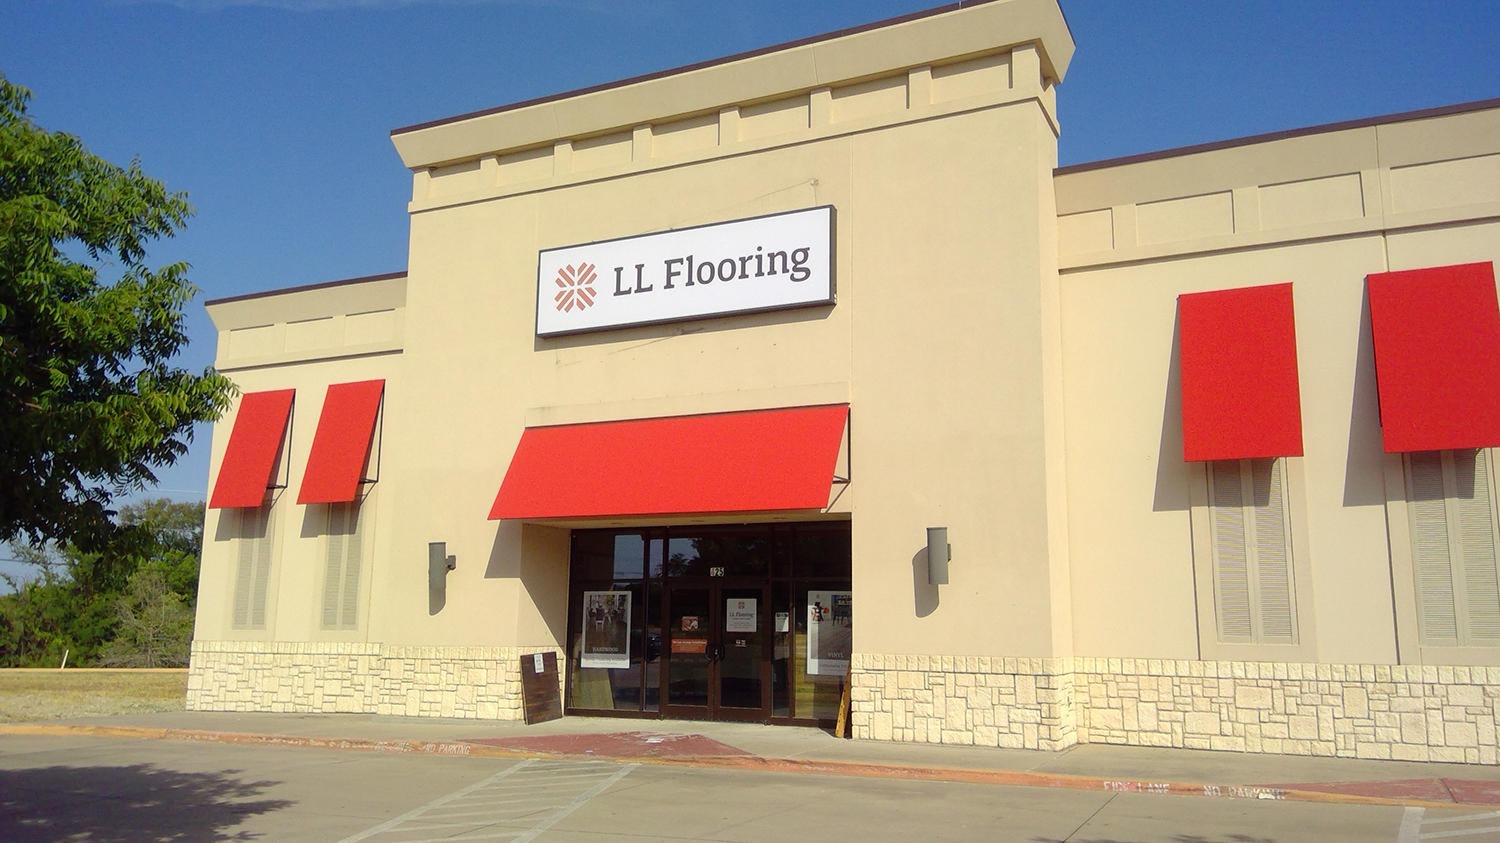 LL Flooring #1359 Fort Worth | 425 Sherry Lane | Storefront